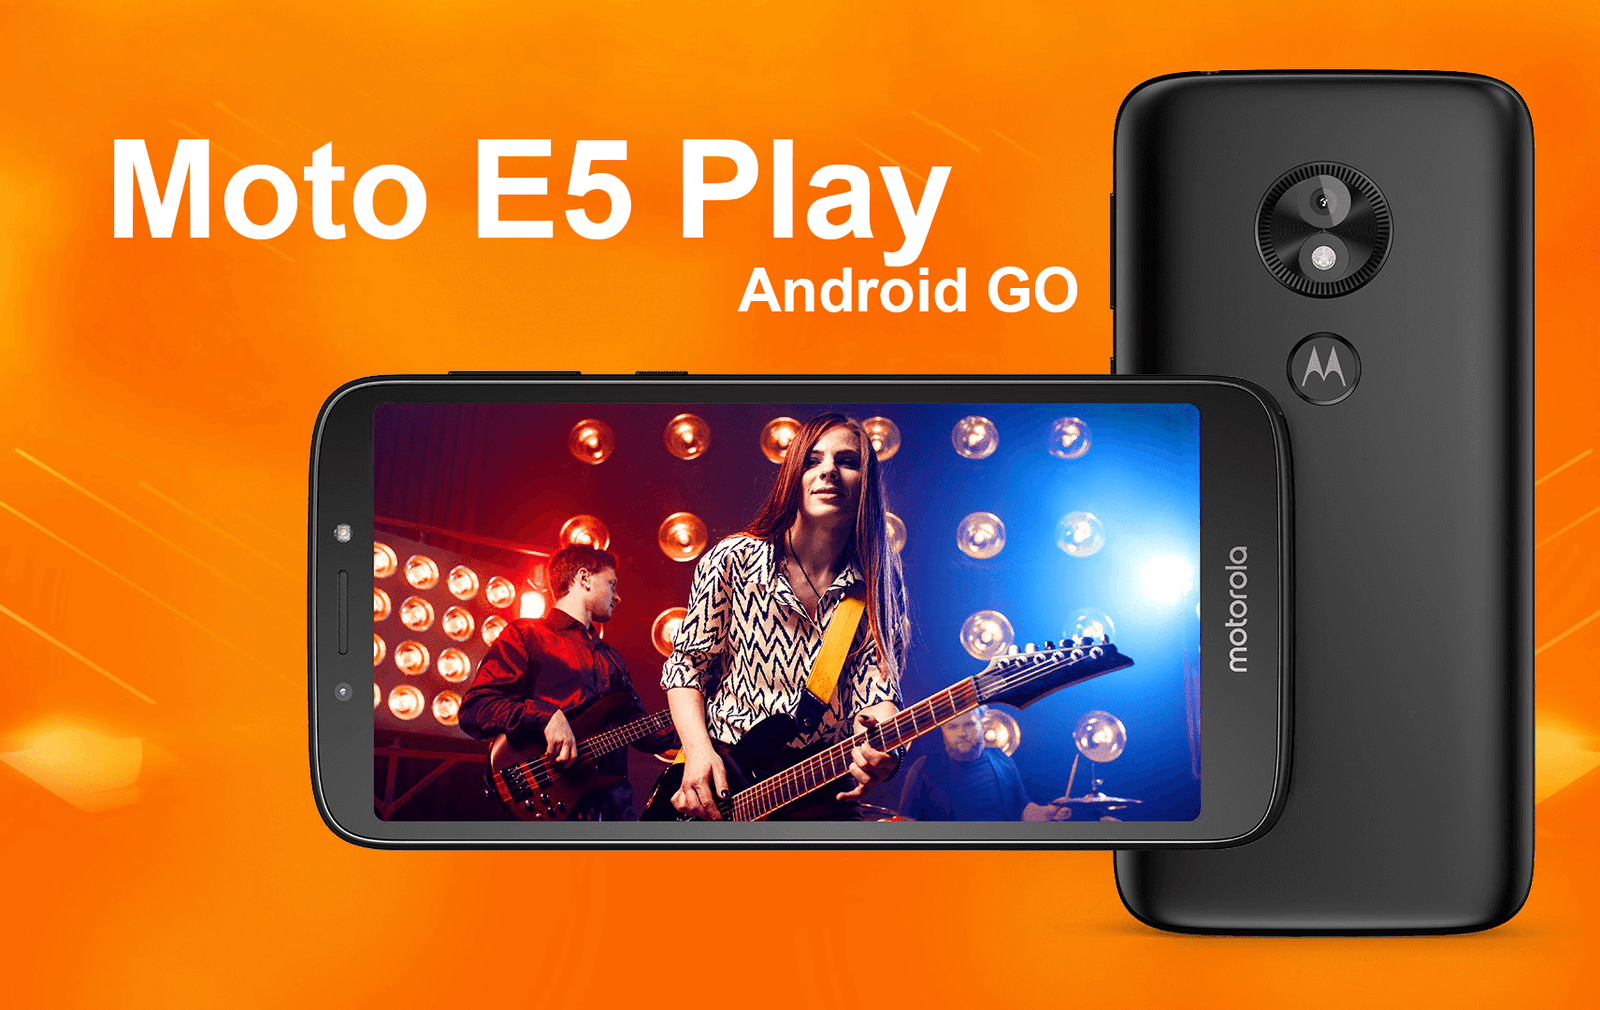 Moto E5 Play with Android Oreo